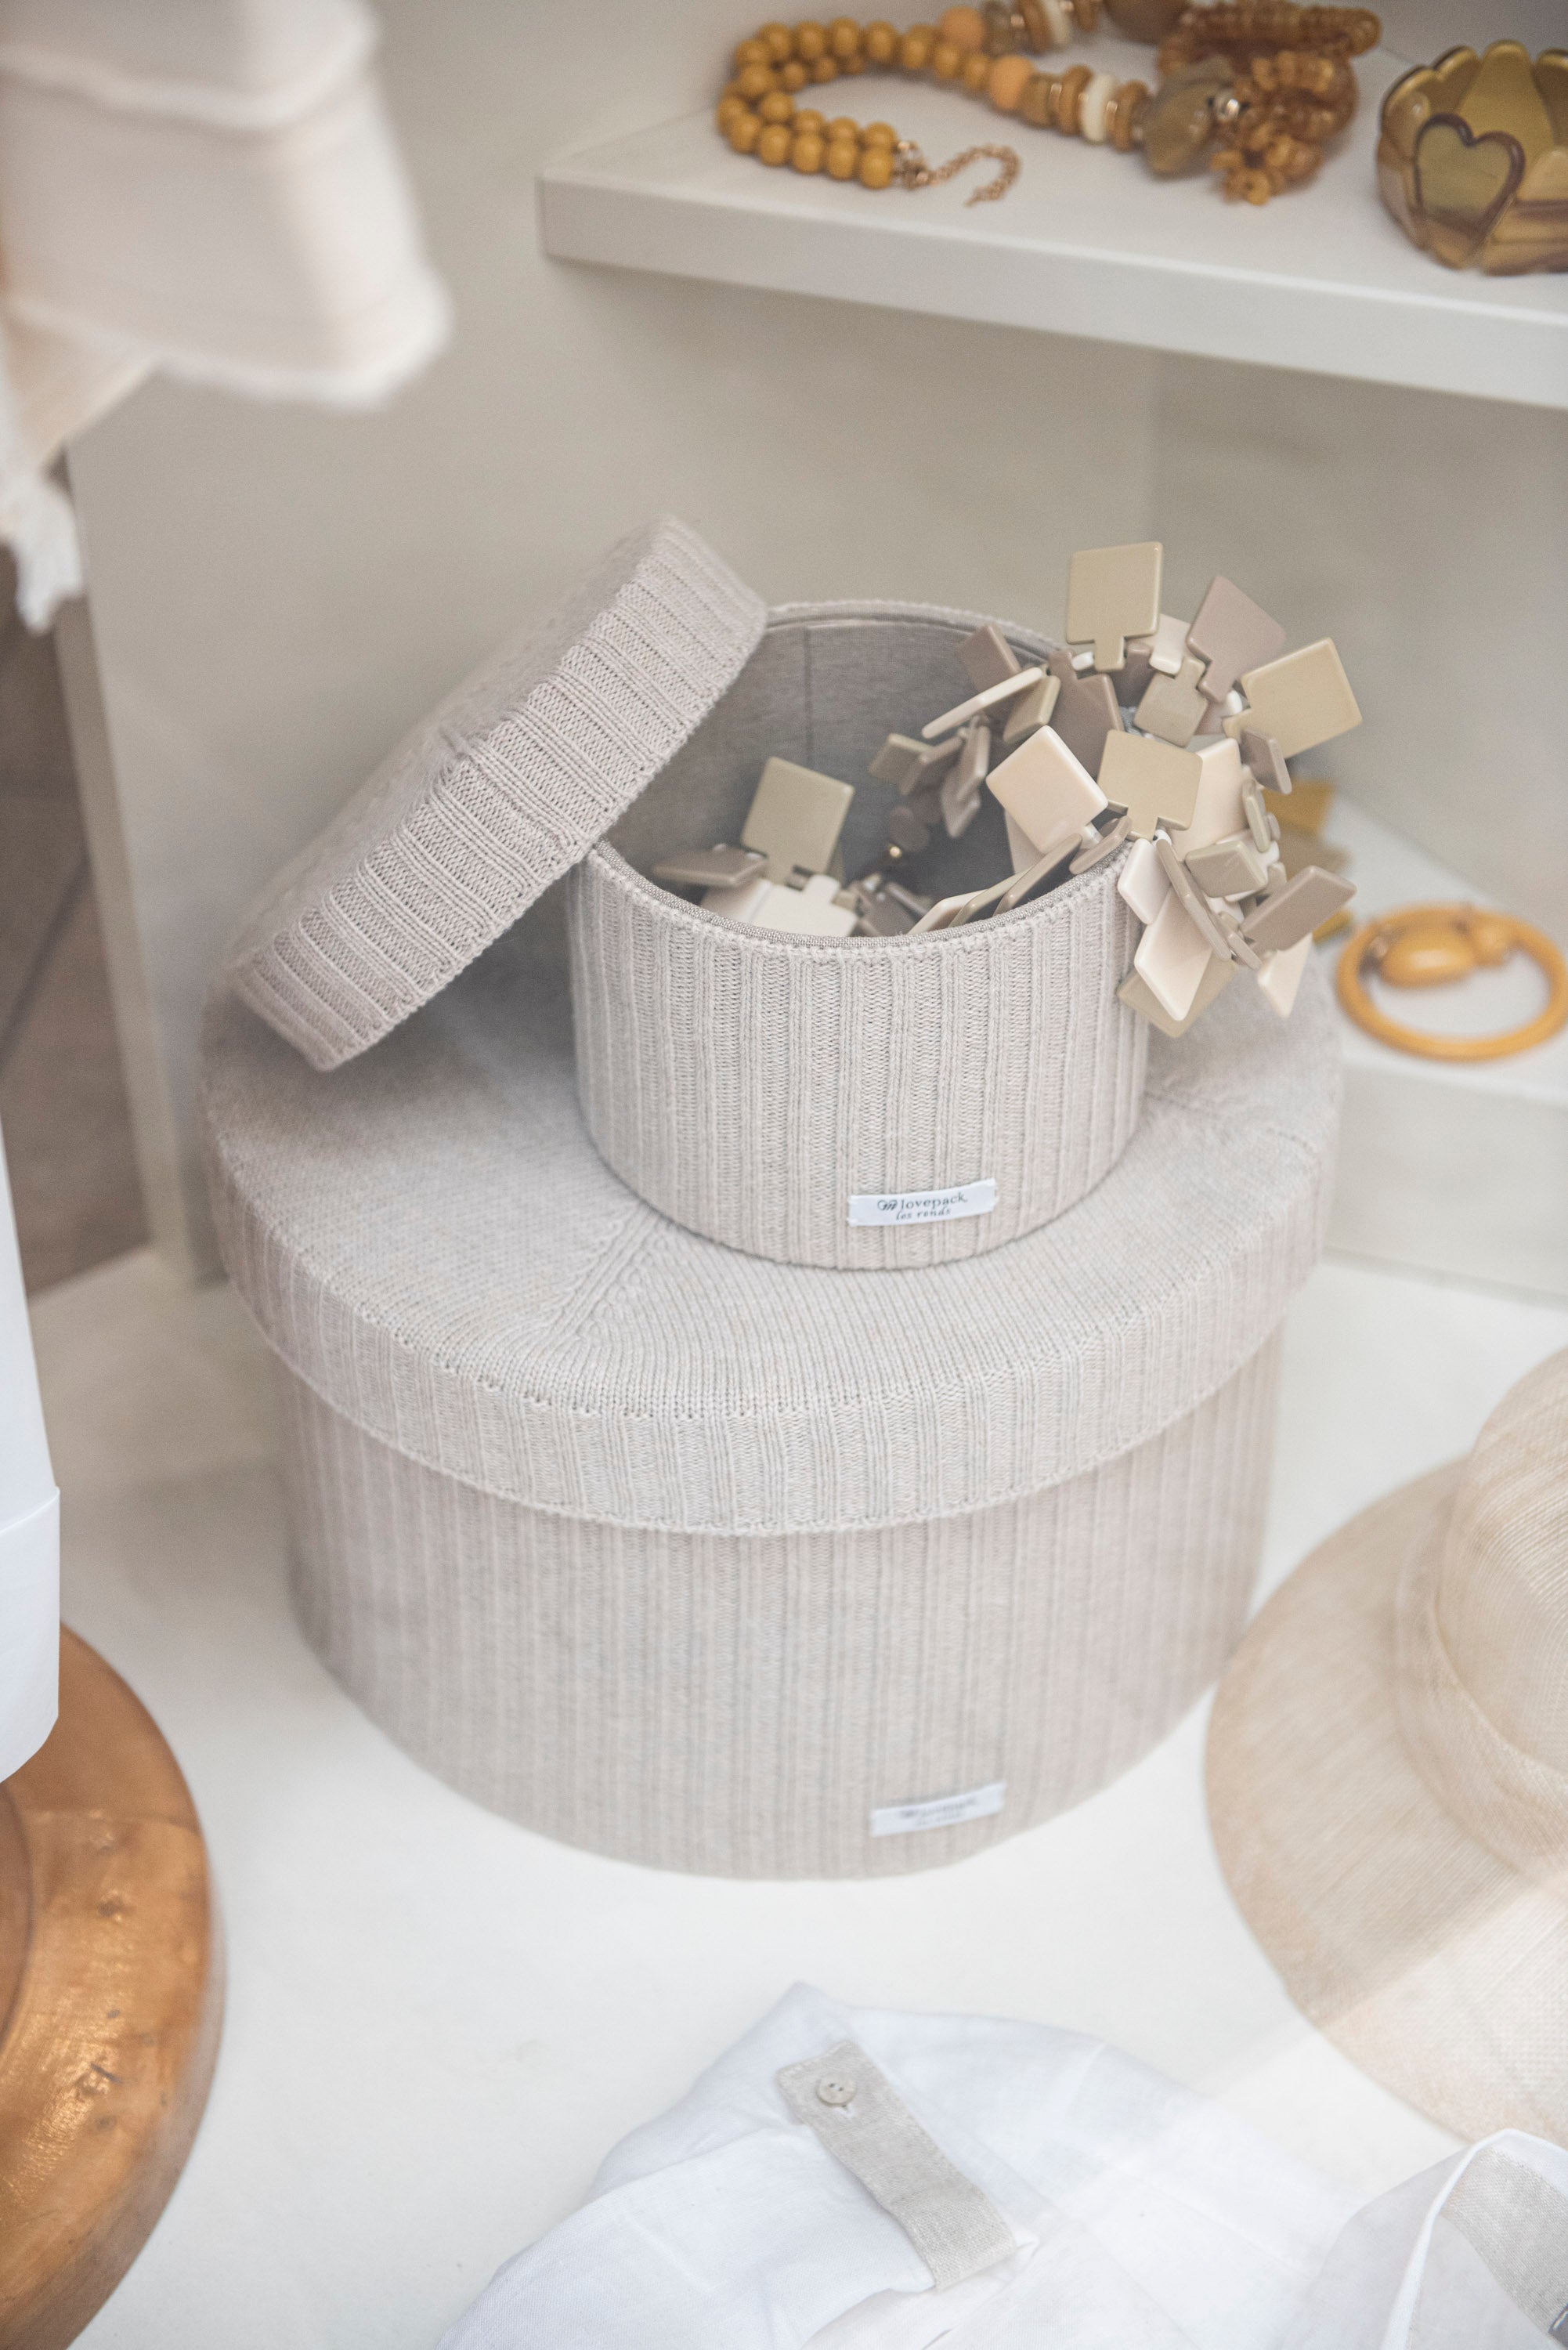 LES RONDS - Set of beige colored hat boxes